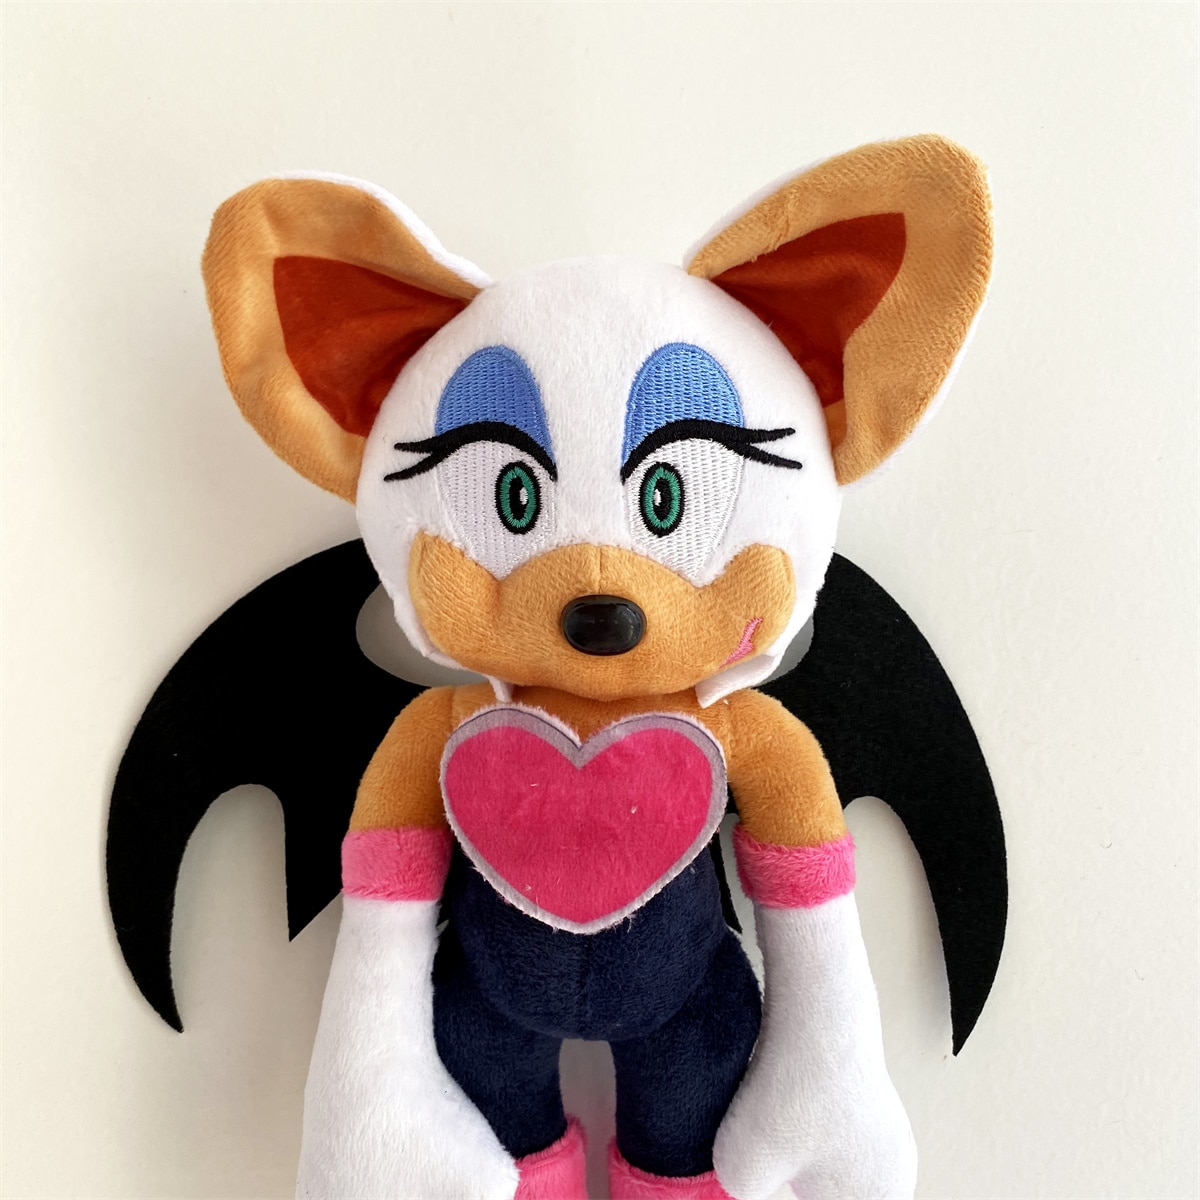 1pcs 30cm Multicolor Rouge the Bat Cute Stuffed Plush Doll Animal CartoonToys Kids Birthday Gifts Bedroom Decorations